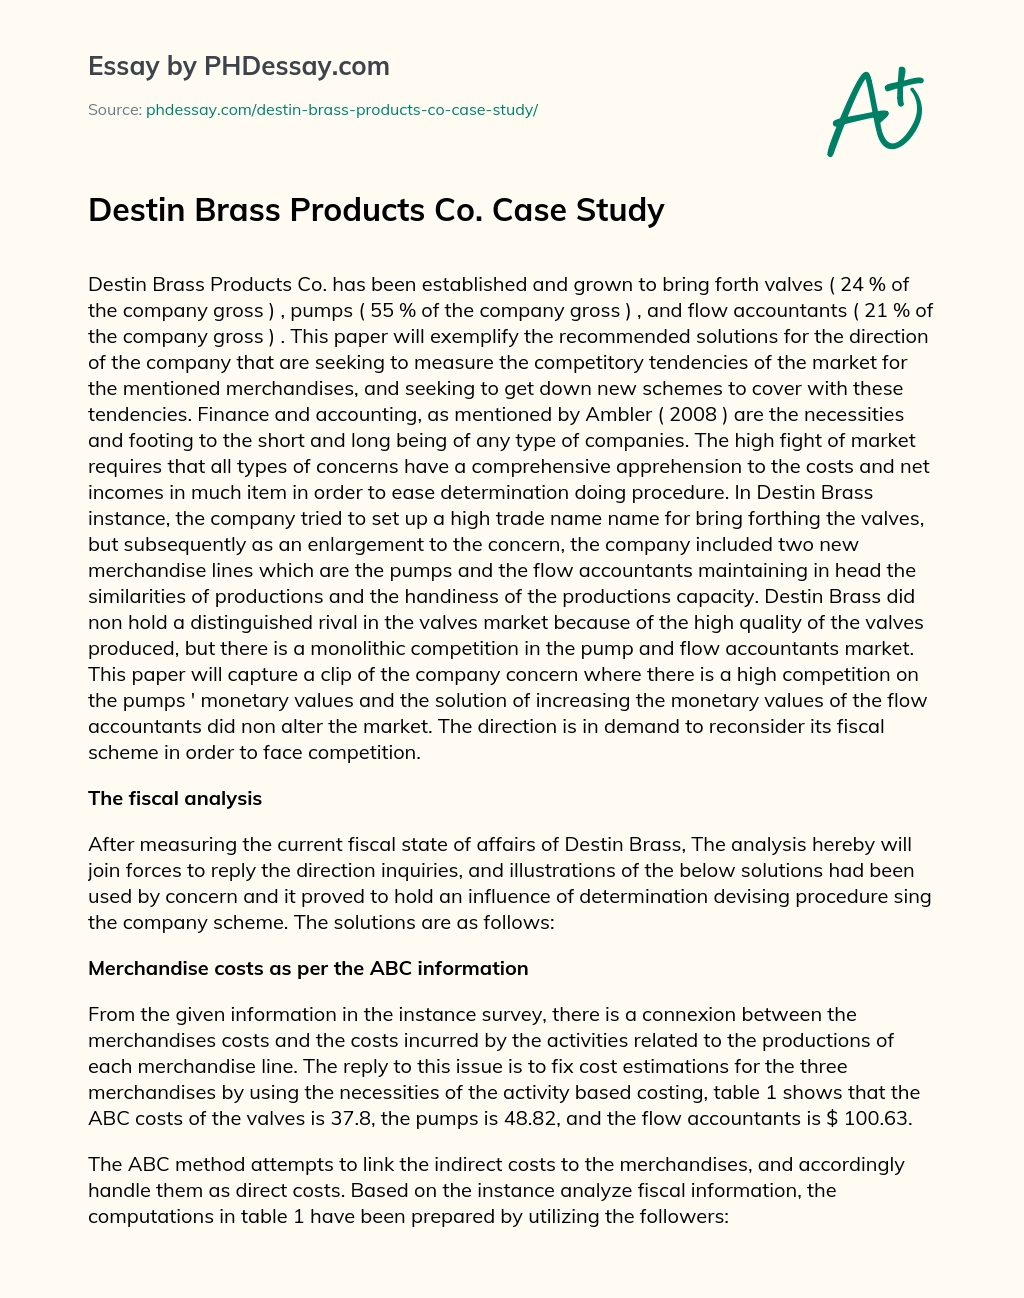 Destin Brass Products Co. Case Study essay